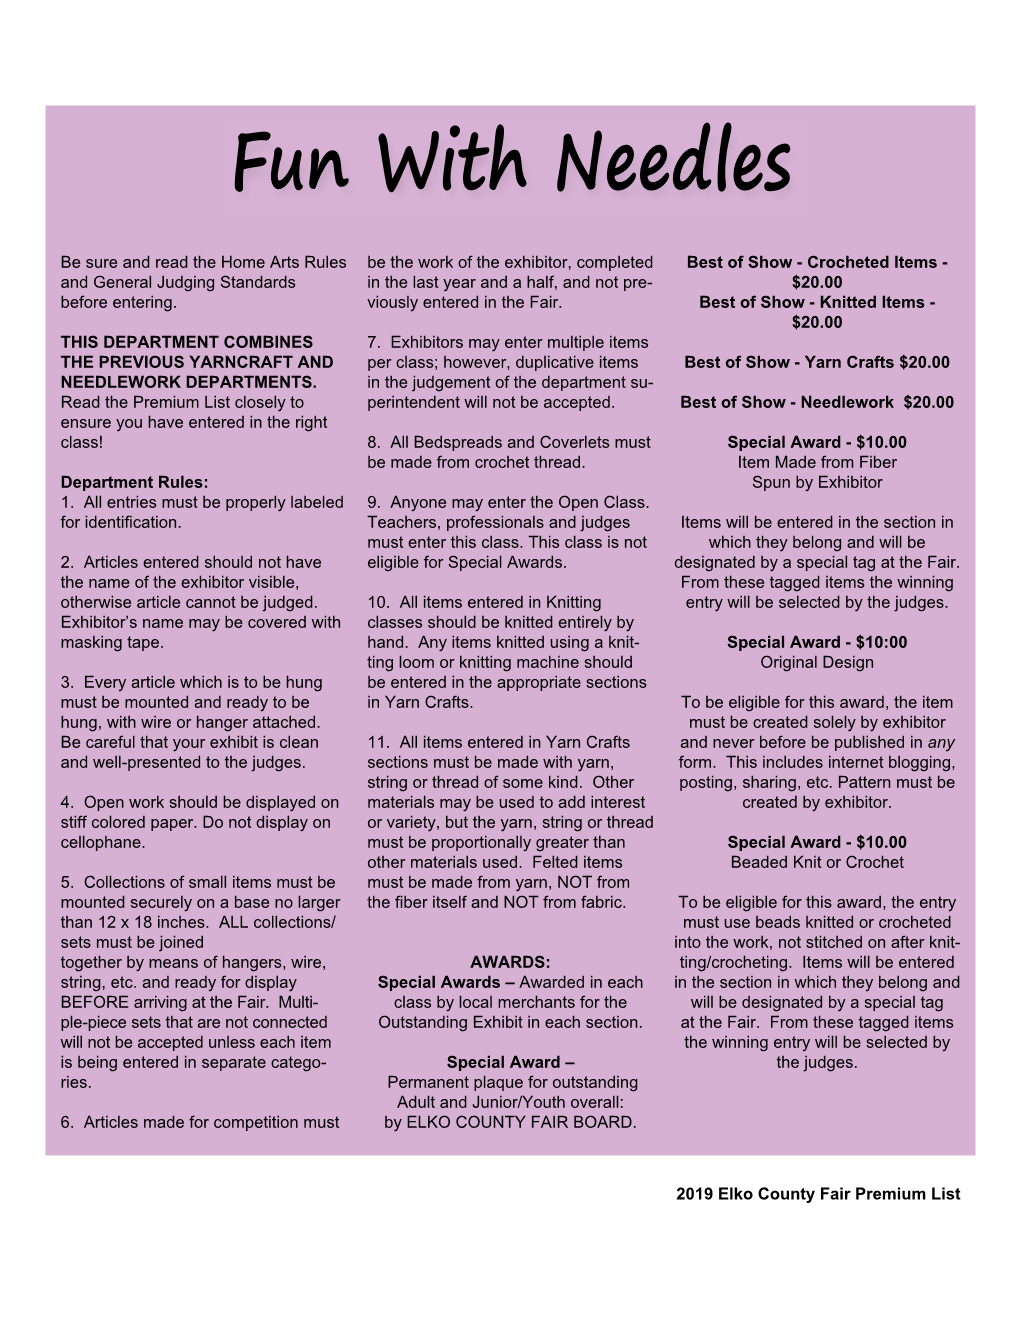 Fun with Needles